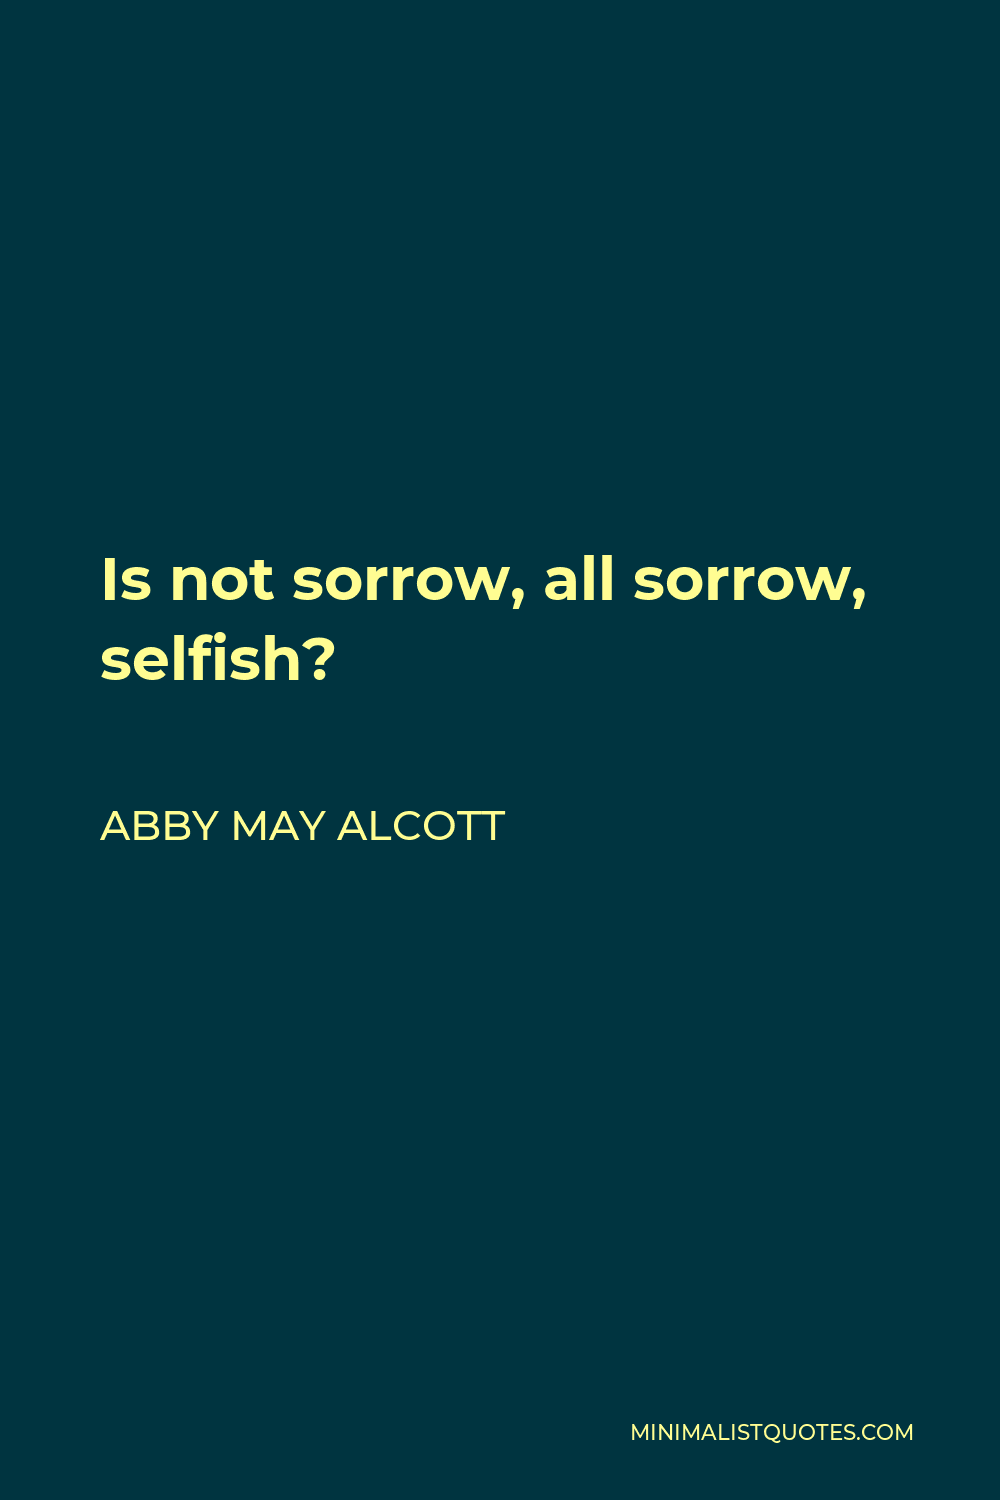 Abby May Alcott Quote - Is not sorrow, all sorrow, selfish?